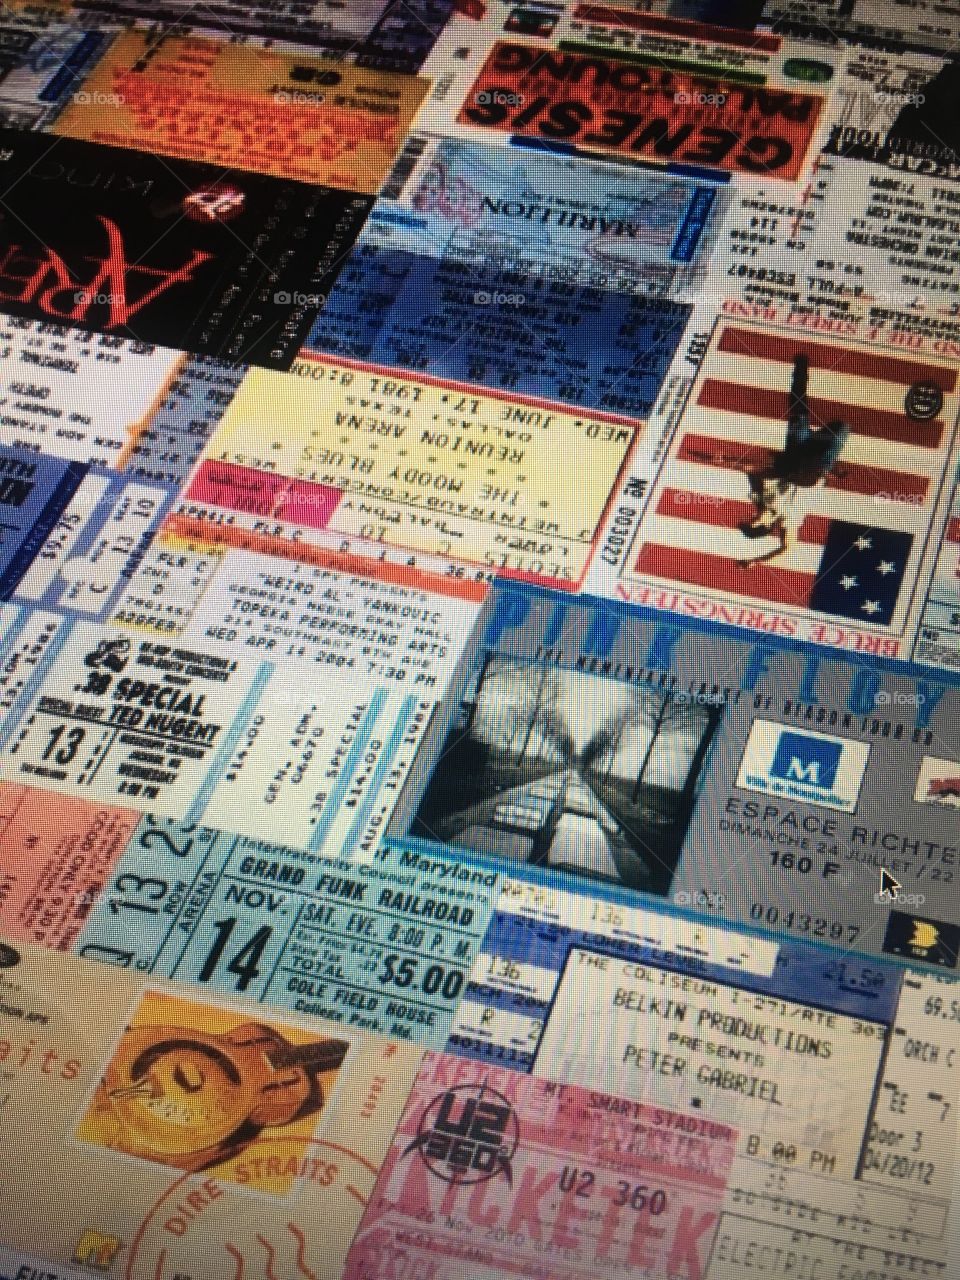 Concert ticket collage.